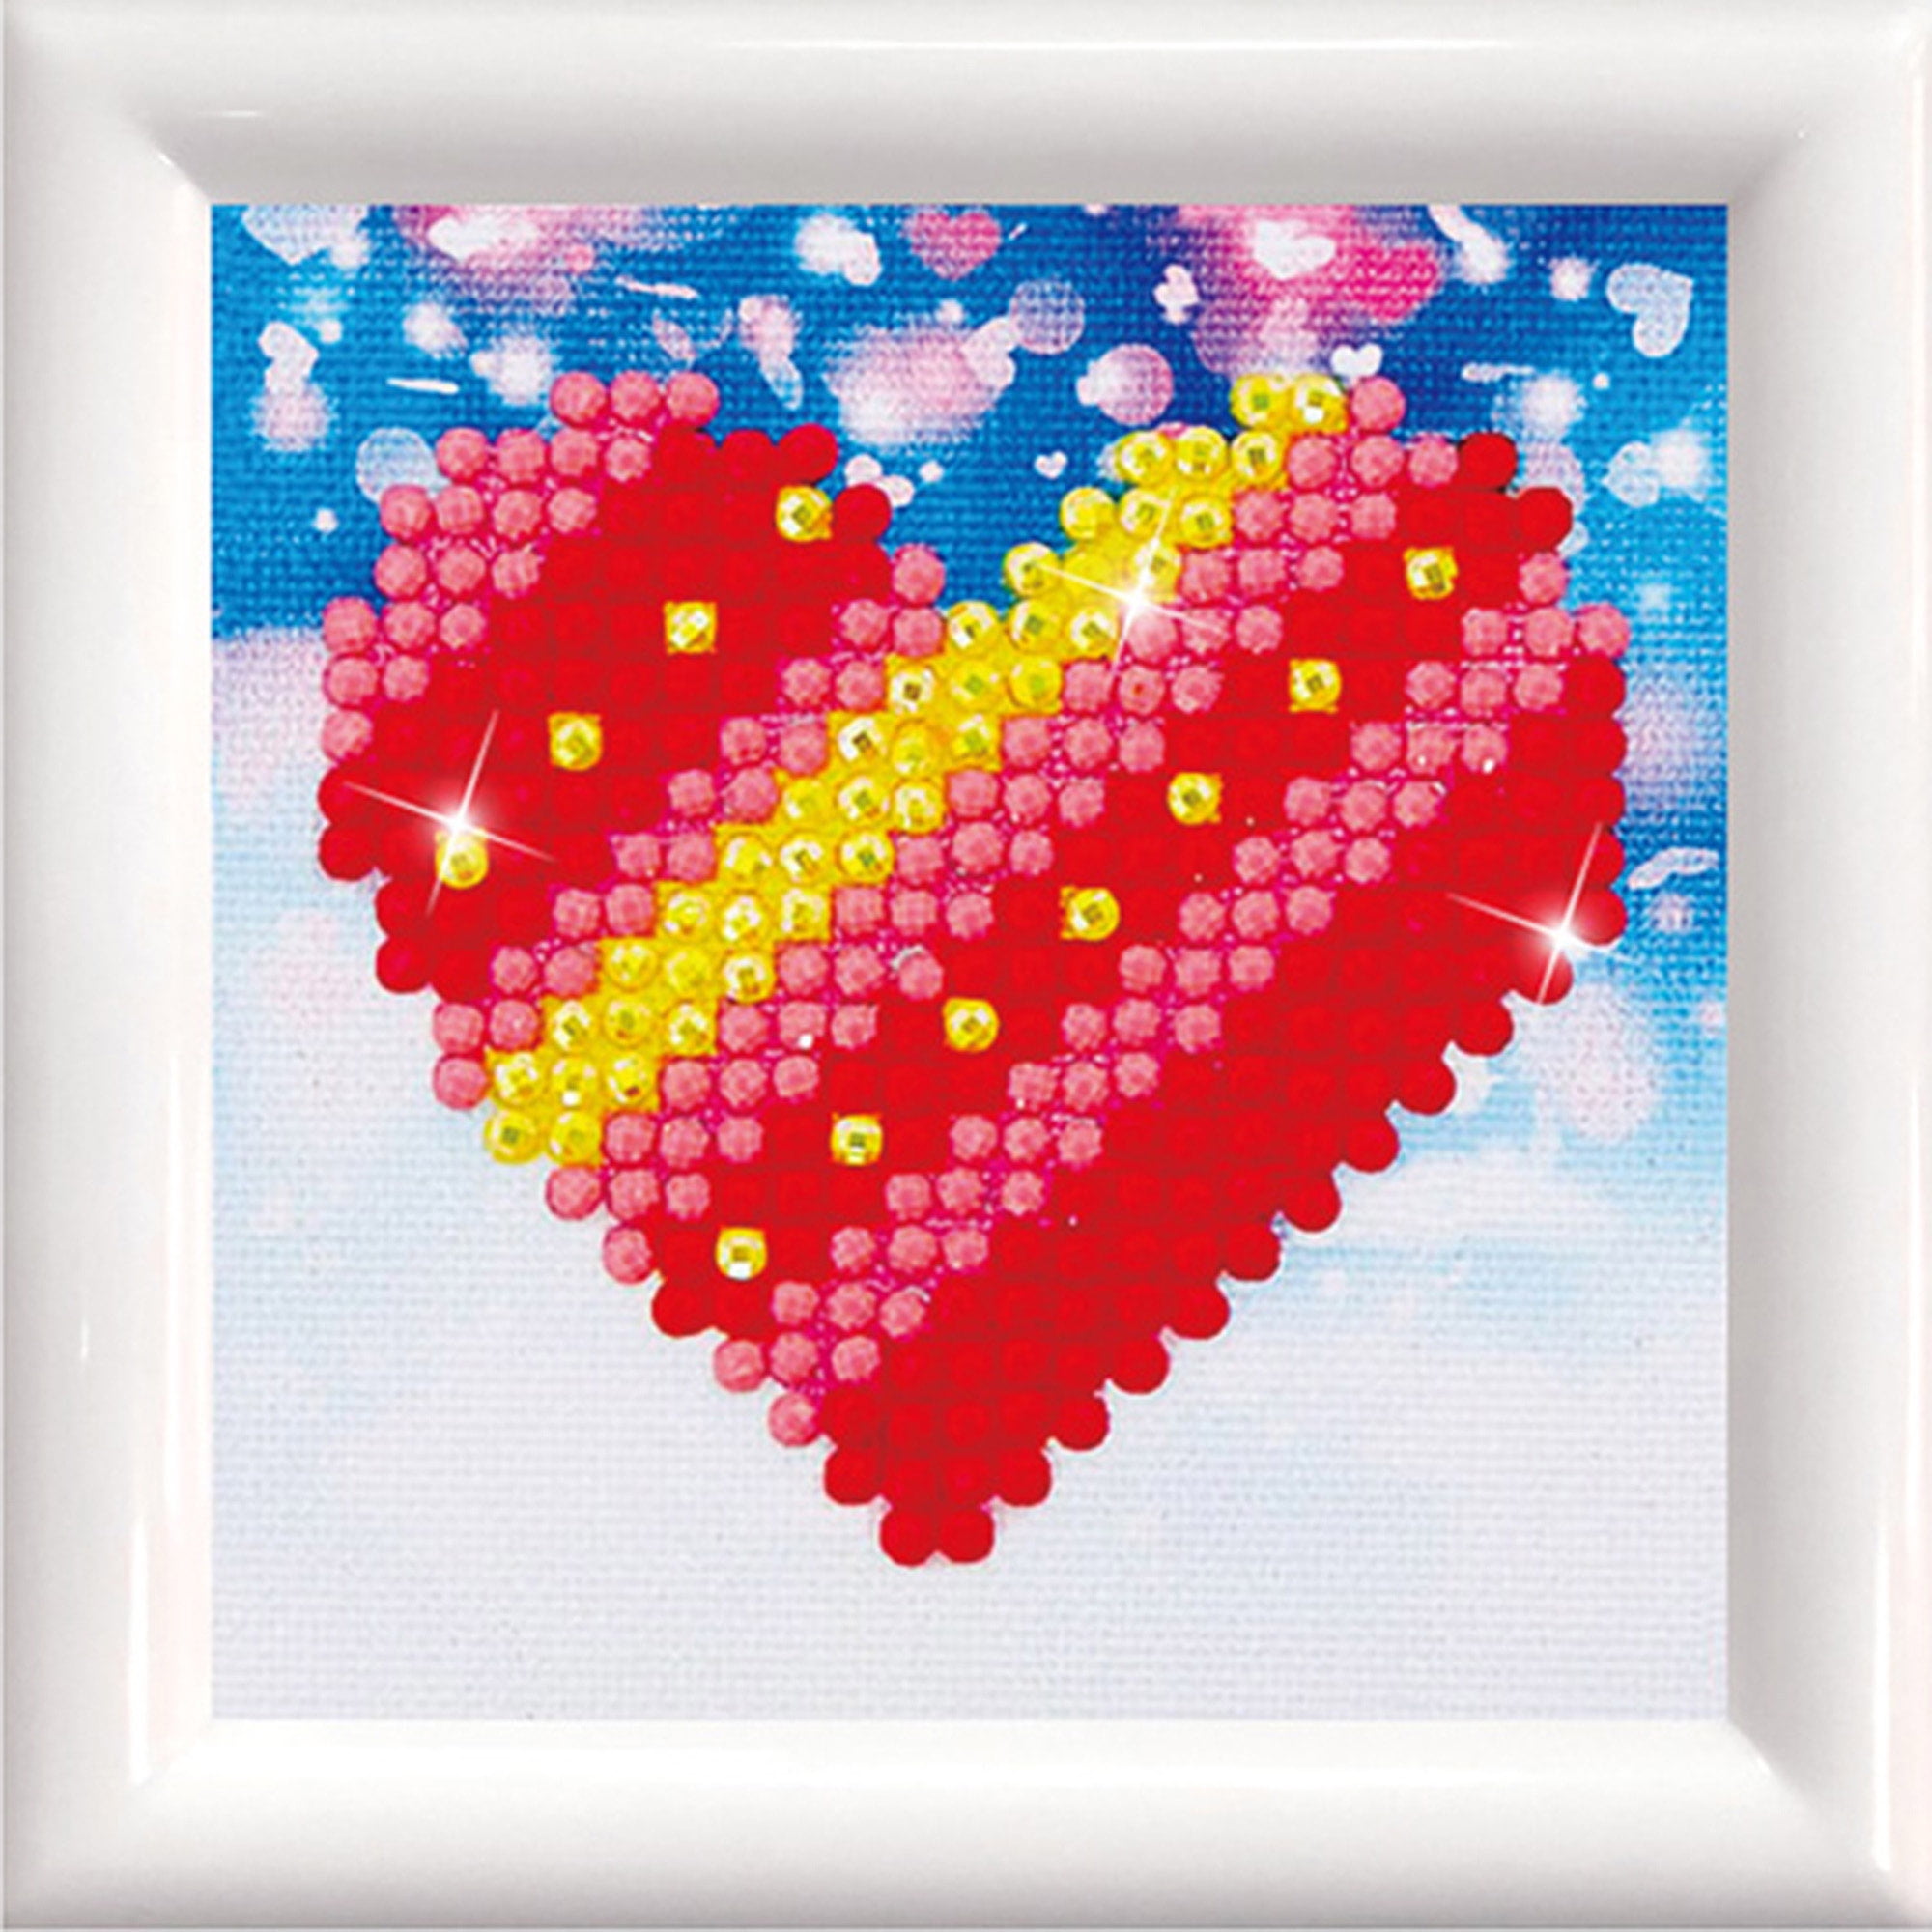 Canvas - 4x4 inch Pastel Polka Dot Hearts